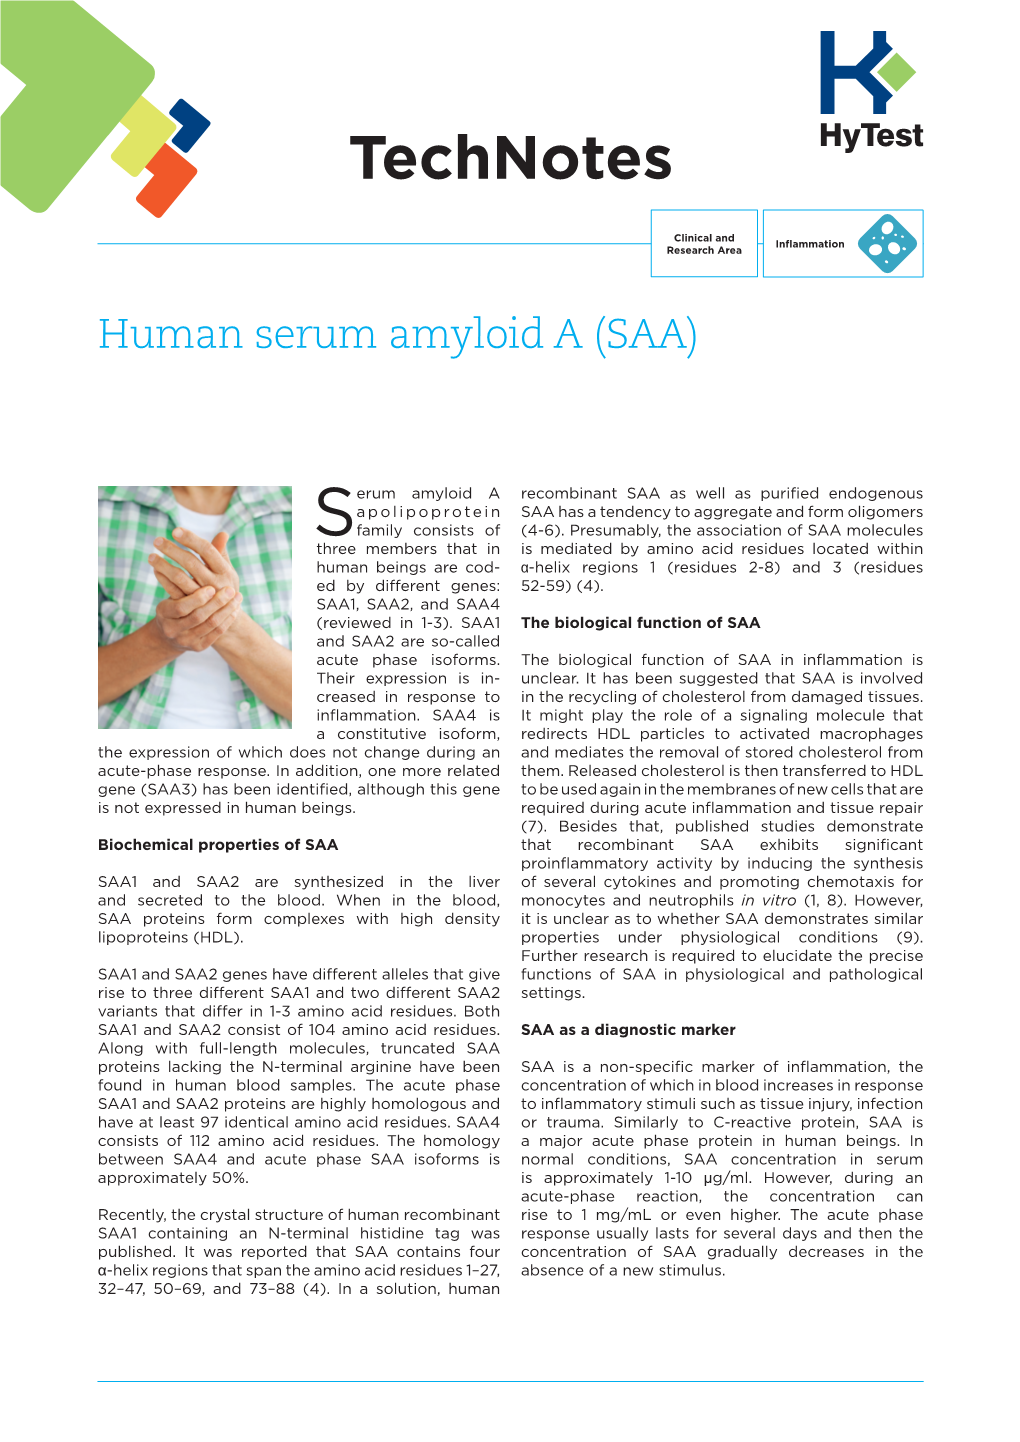 Human Serum Amyloid a (SAA)